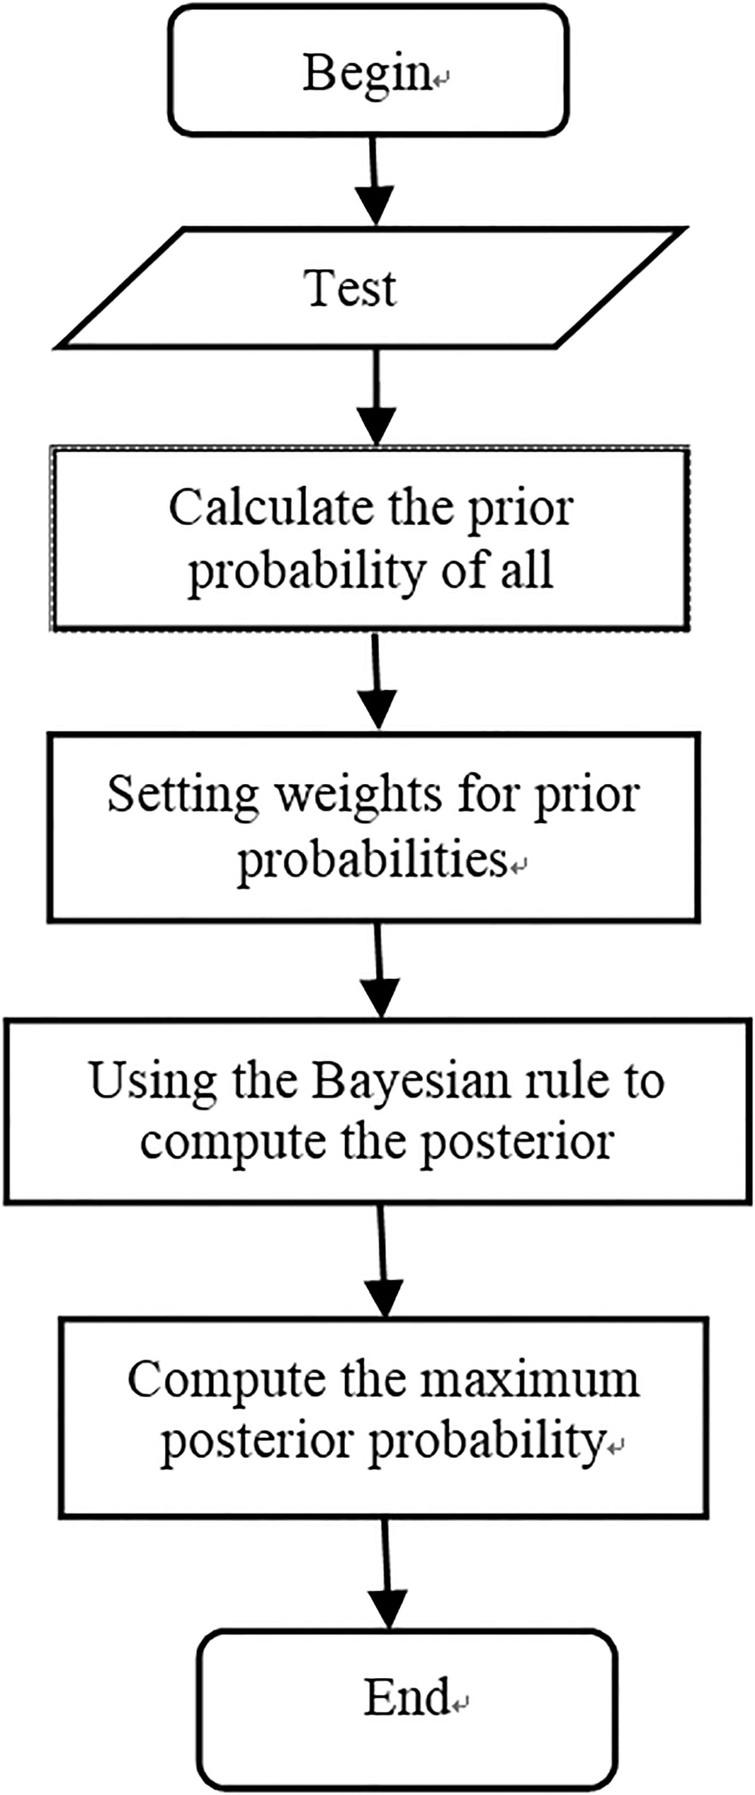 Flowchart of the prediction algorithm.